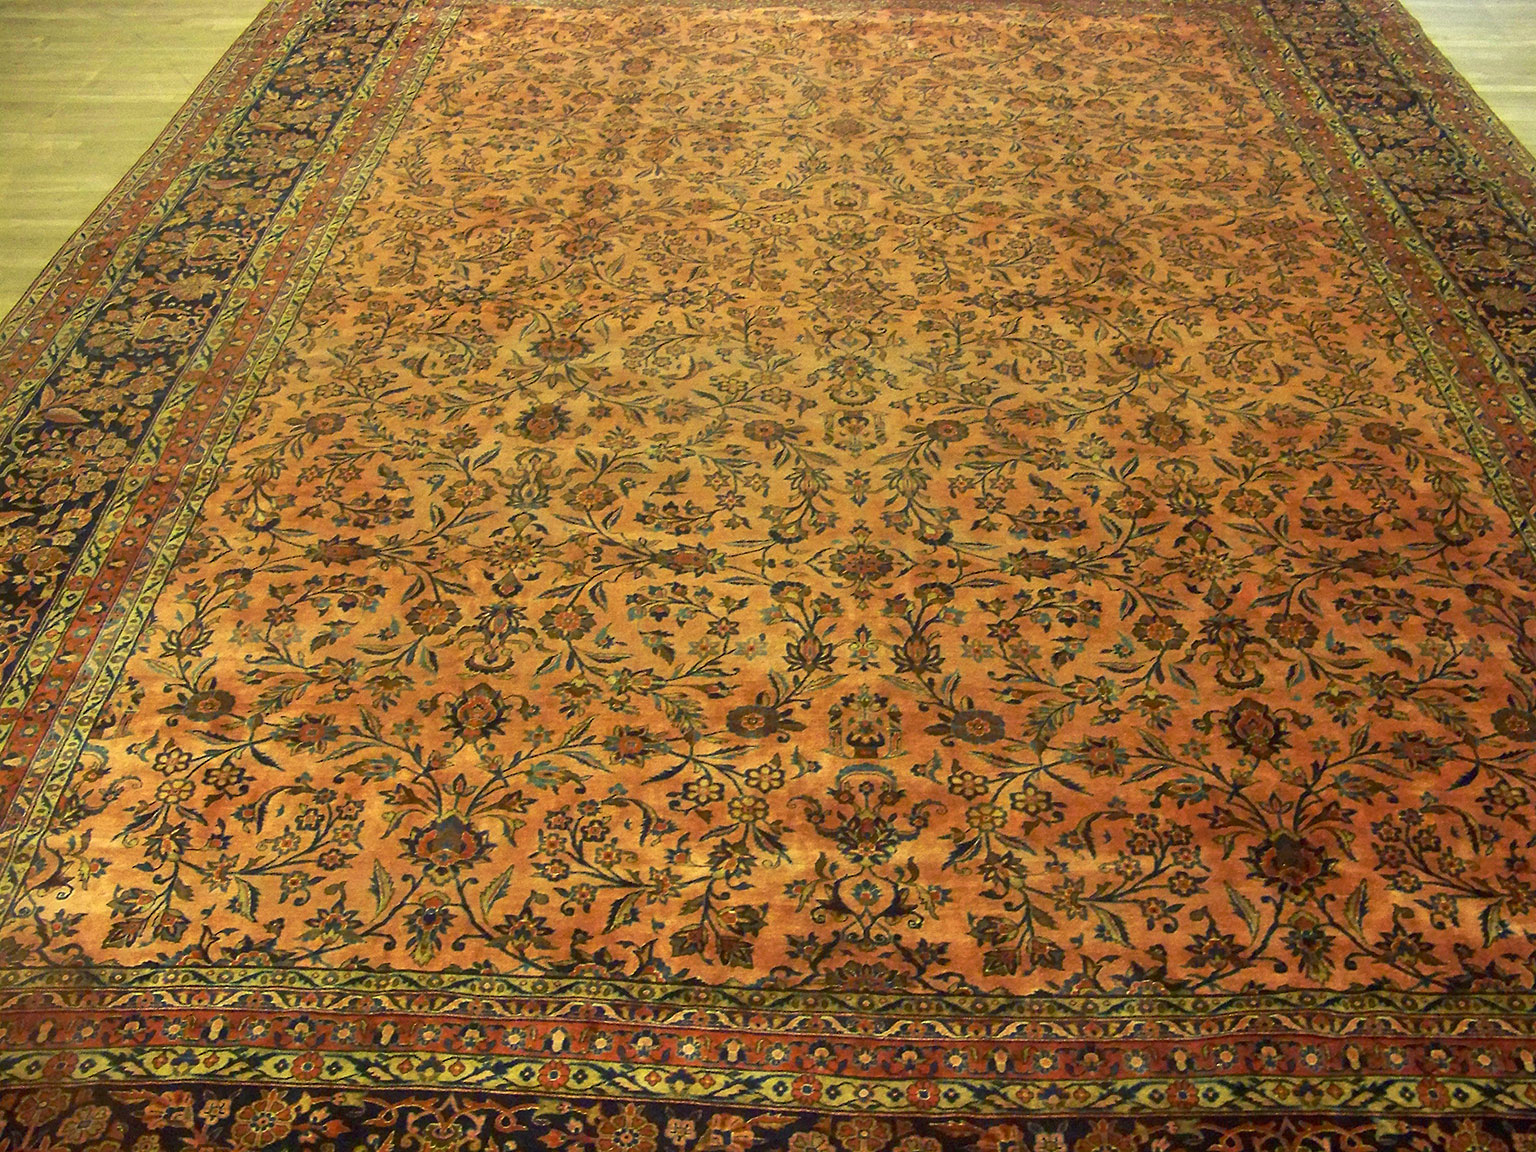 Antique kashan Carpet - # 52351